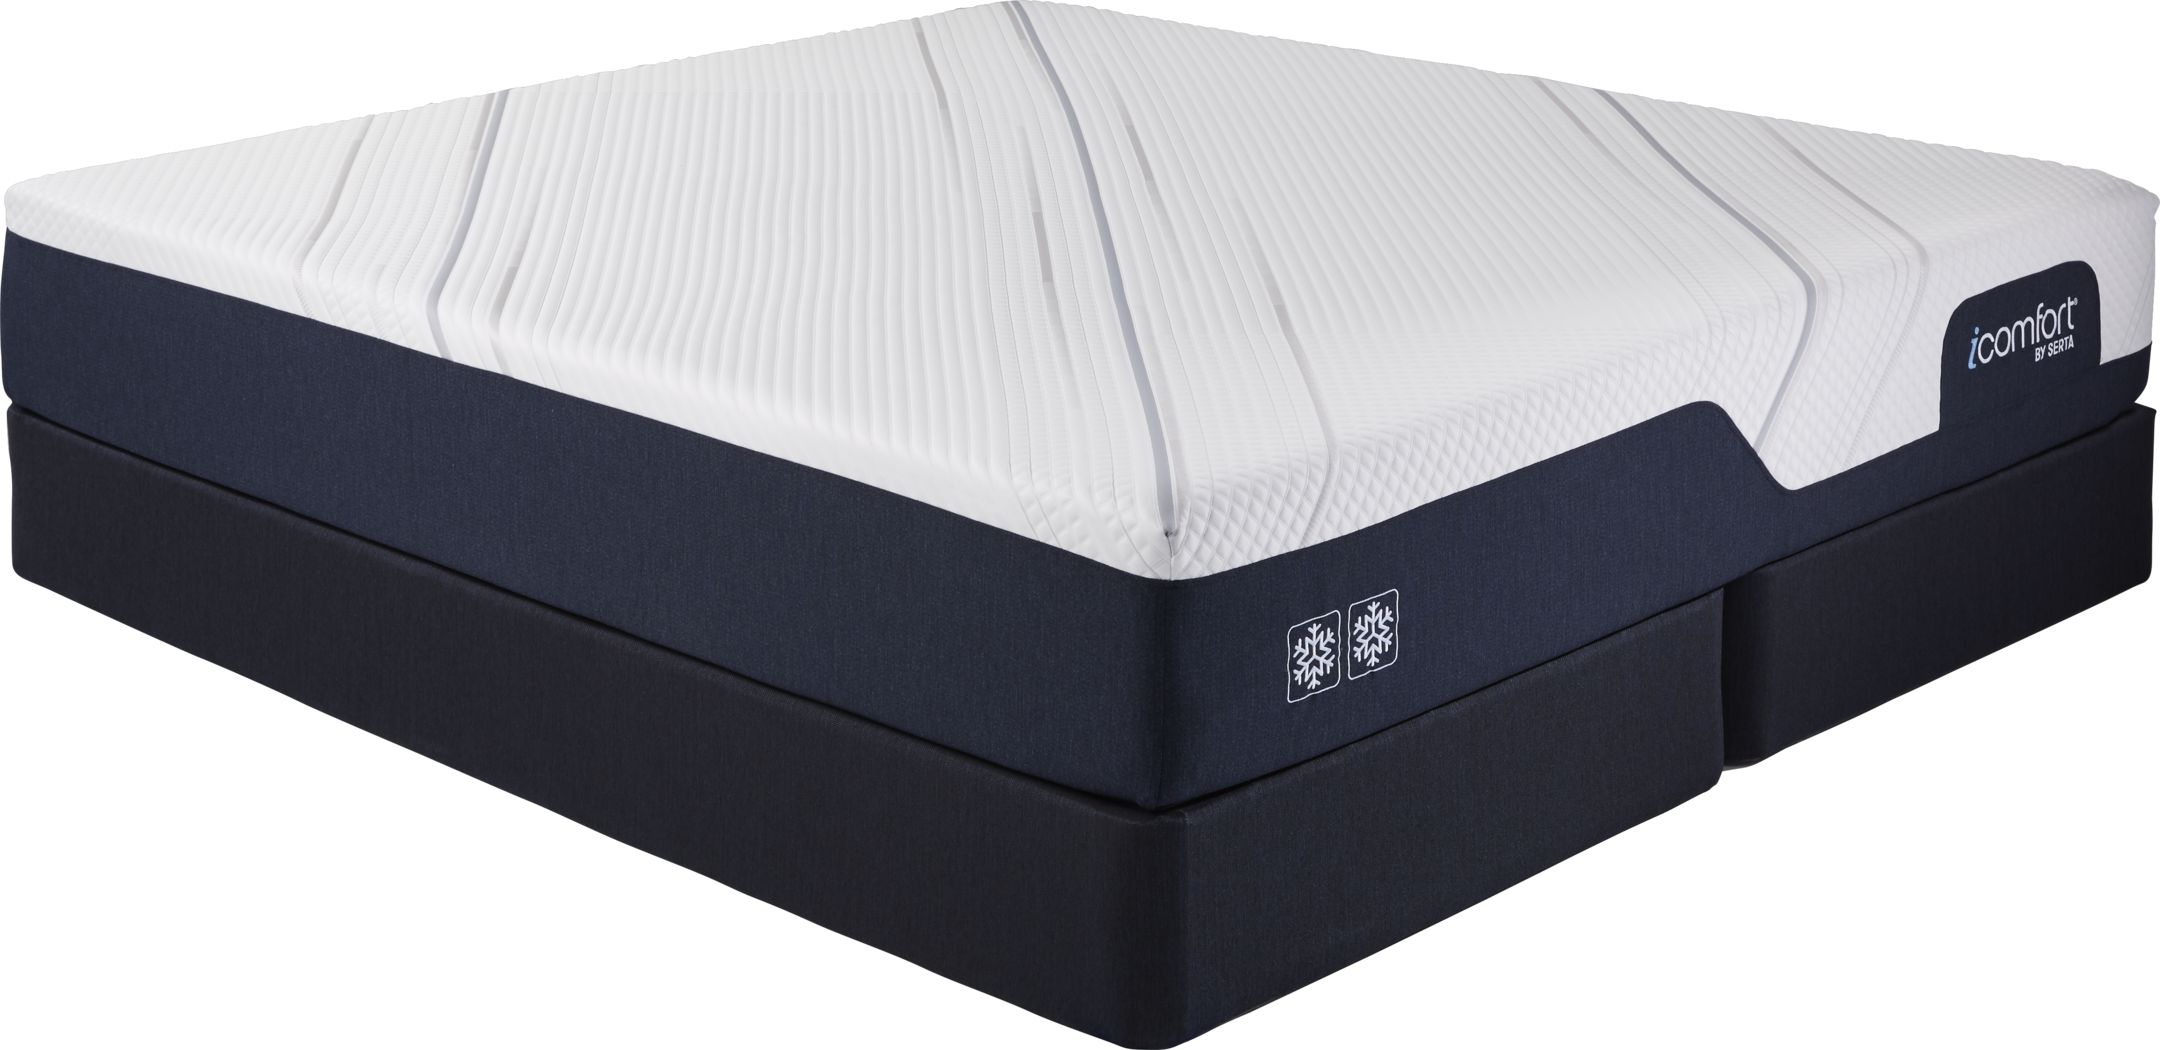 black mattress sale icomfort